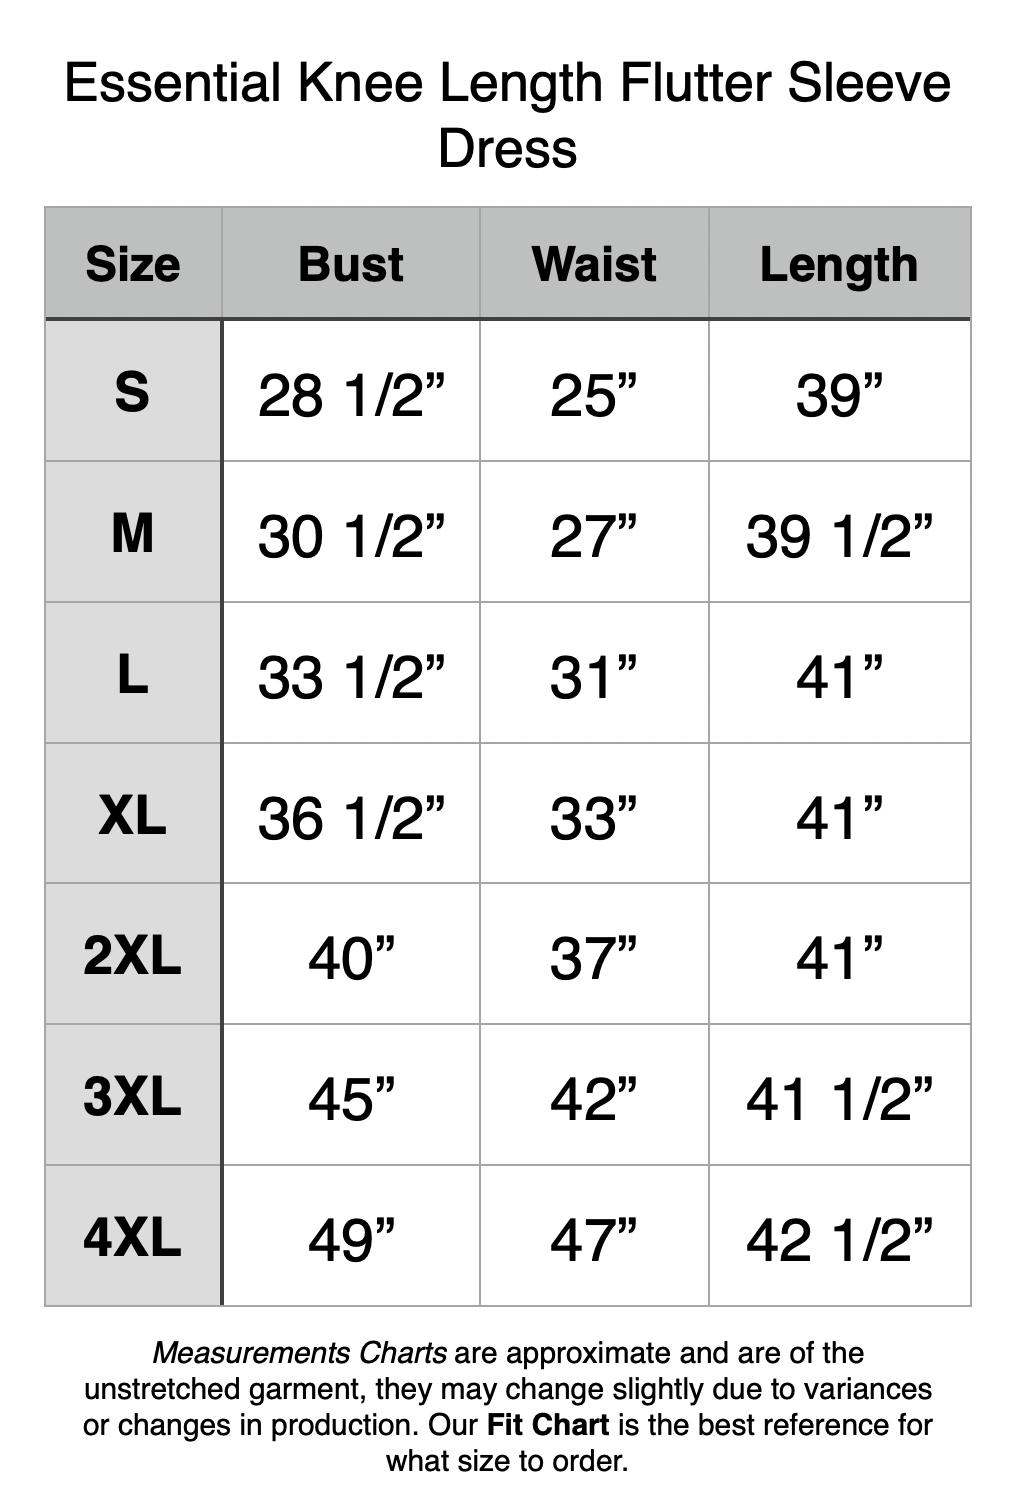 Essential Knee Length Flutter Sleeve Dress (Ponte)  - S: 28.5" Bust, 25” Waist, 39" Length. M: 30.5" Bust, 27” Waist, 39.5" Length. L: 33.5" Bust, 31” Waist, 41" Length. XL: 36.5" Bust, 33” Waist, 41" Length. 2XL: 40" Bust, 37” Waist, 41" Length. 3XL: 45" Bust, 42” Waist, 41.5" Length. 4XL: 49" Bust, 47” Waist, 42.5" Length.